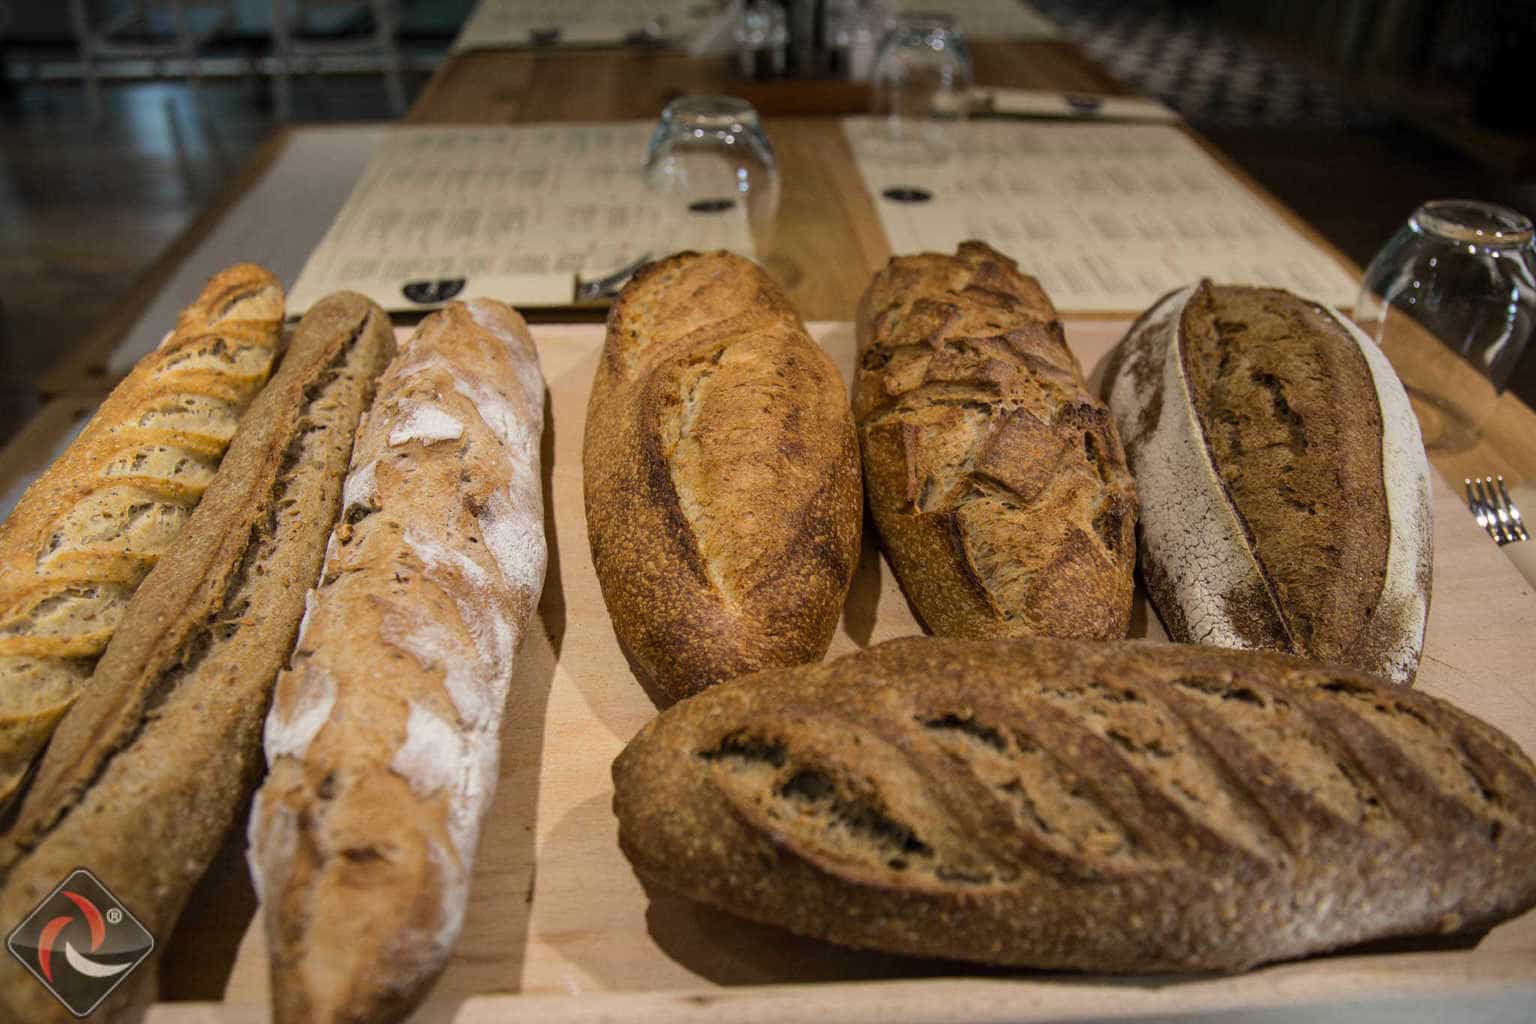 Baked bread - bakery product